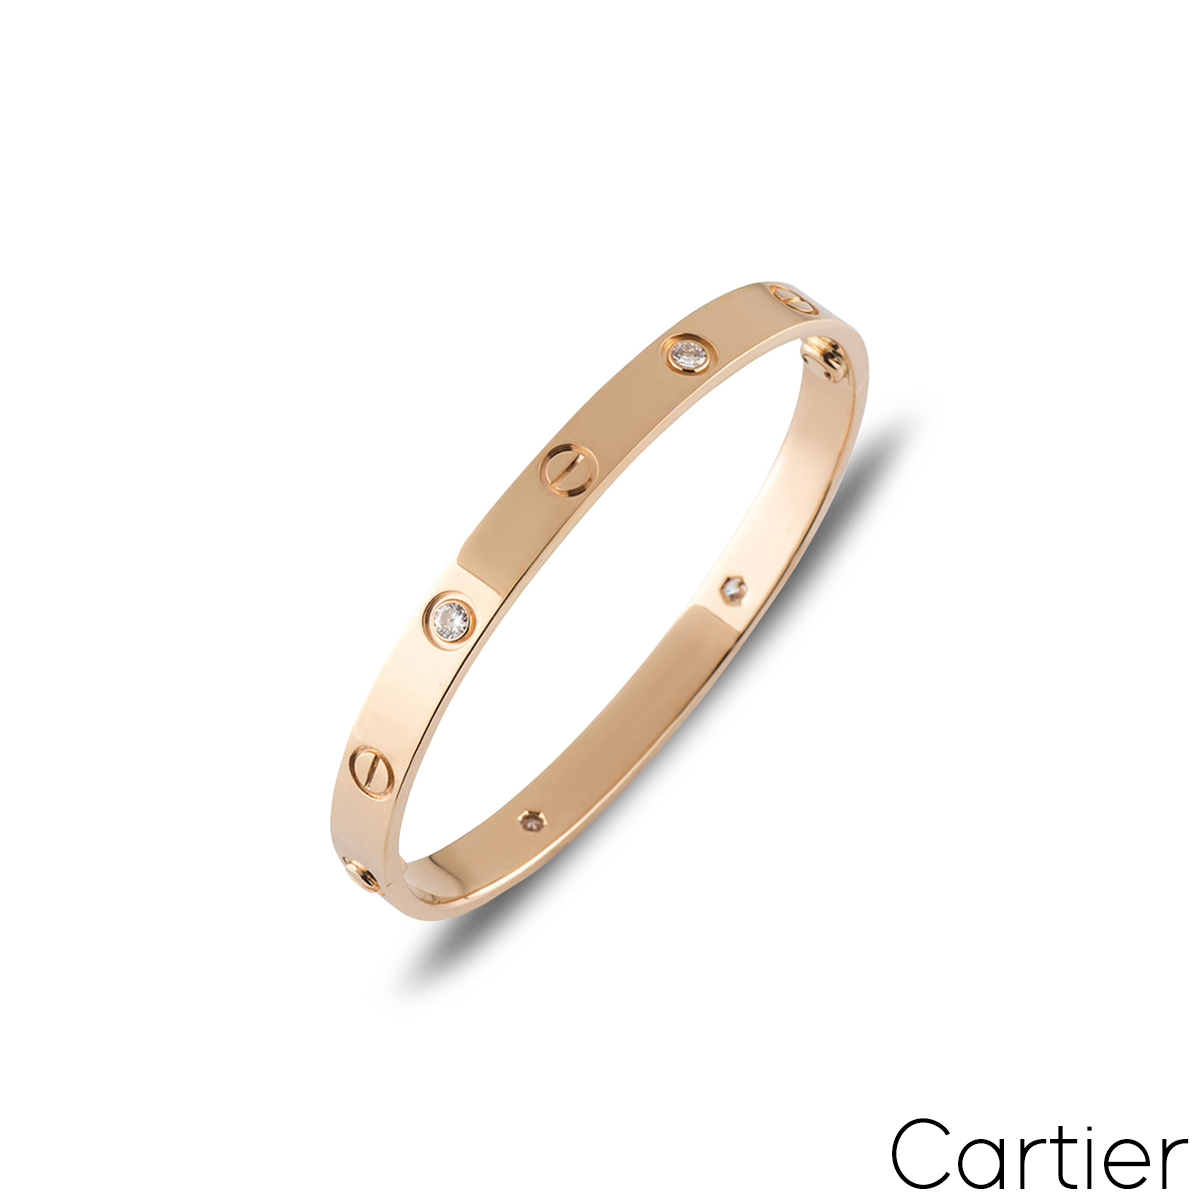 weight of cartier love bracelet size 16